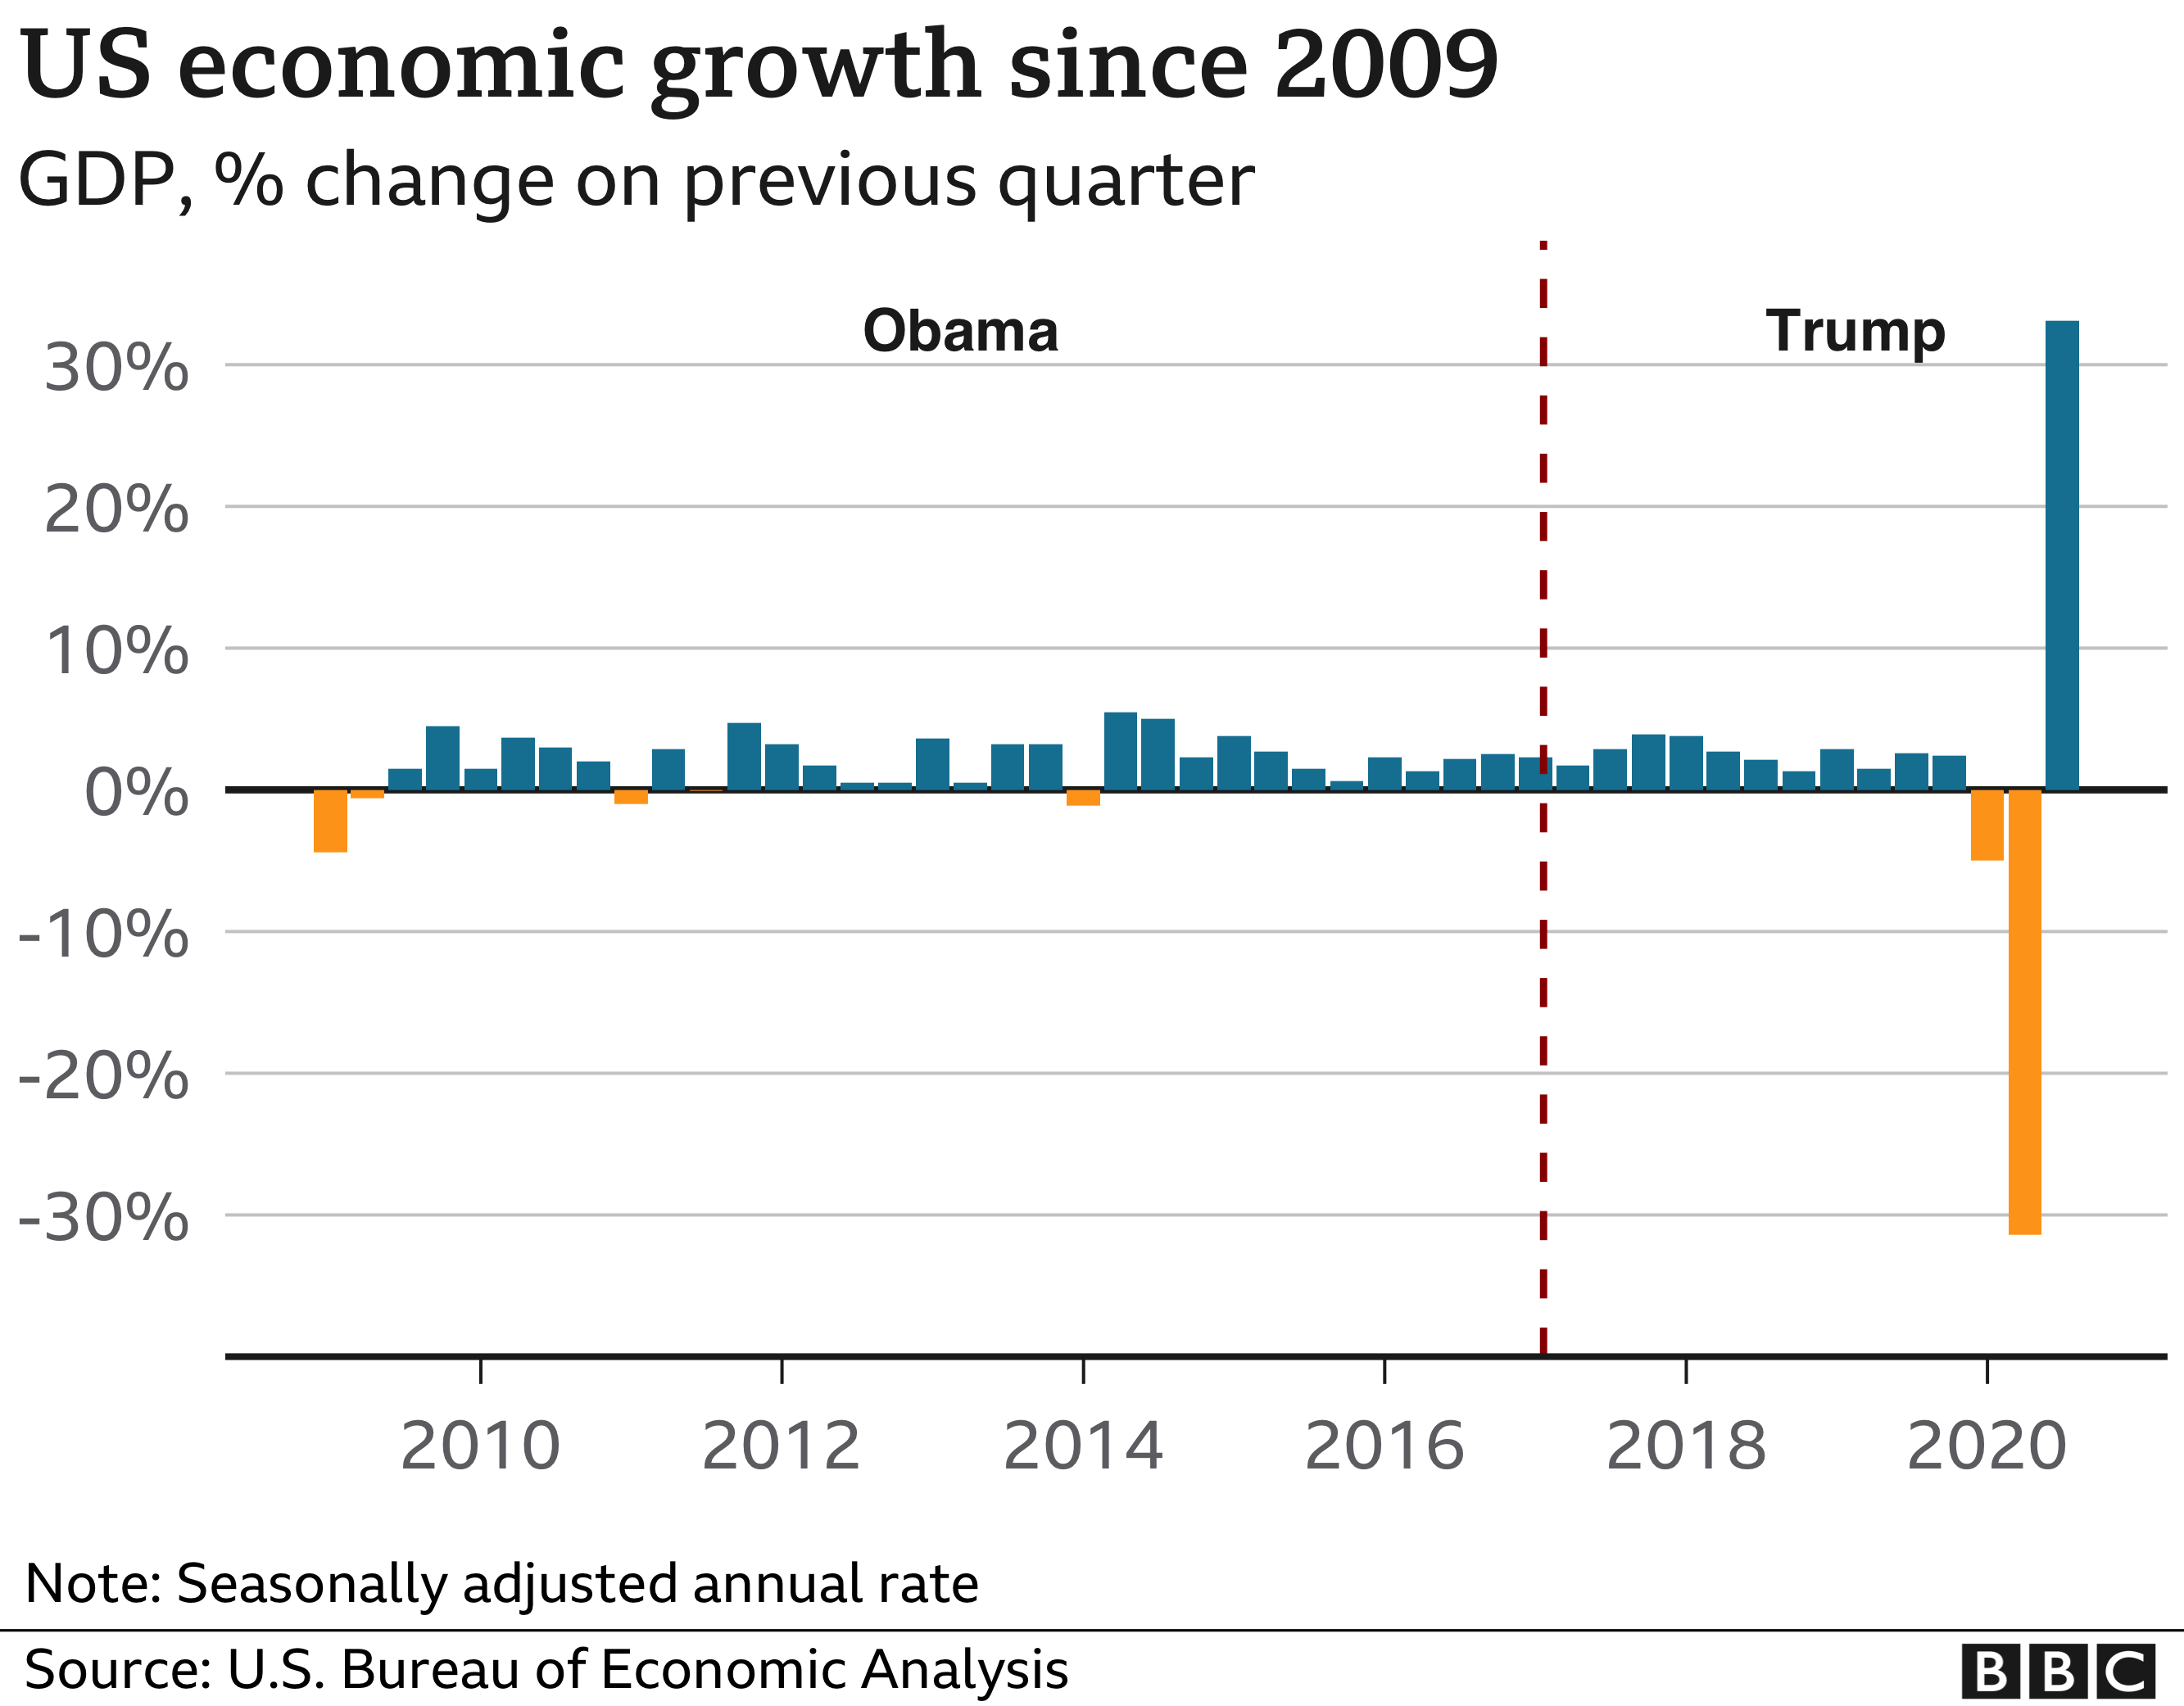 Graph of US economic growth 2010-2020